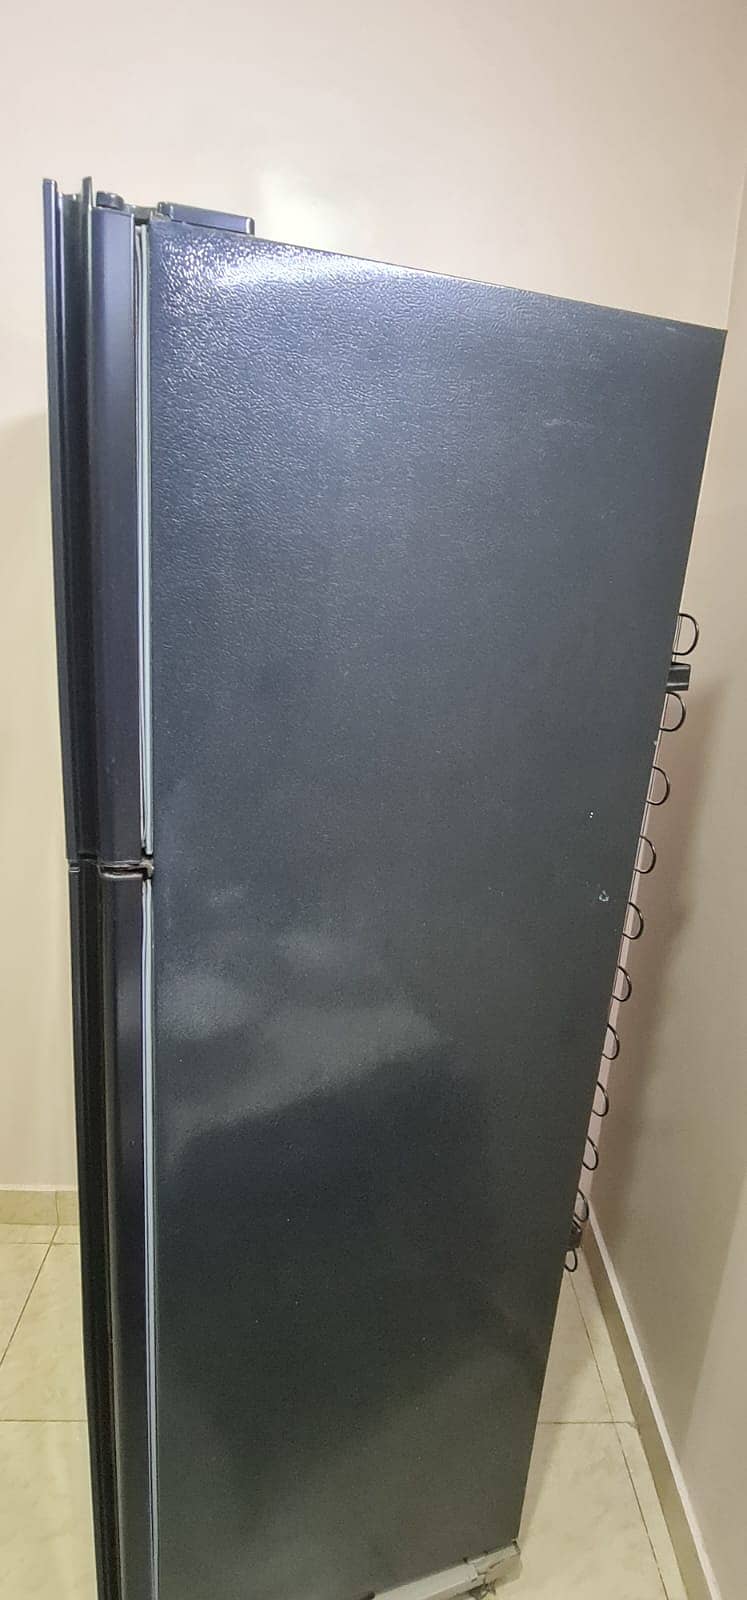 Dawlance 91996 ES PLUS 18cft Refrigerator 3